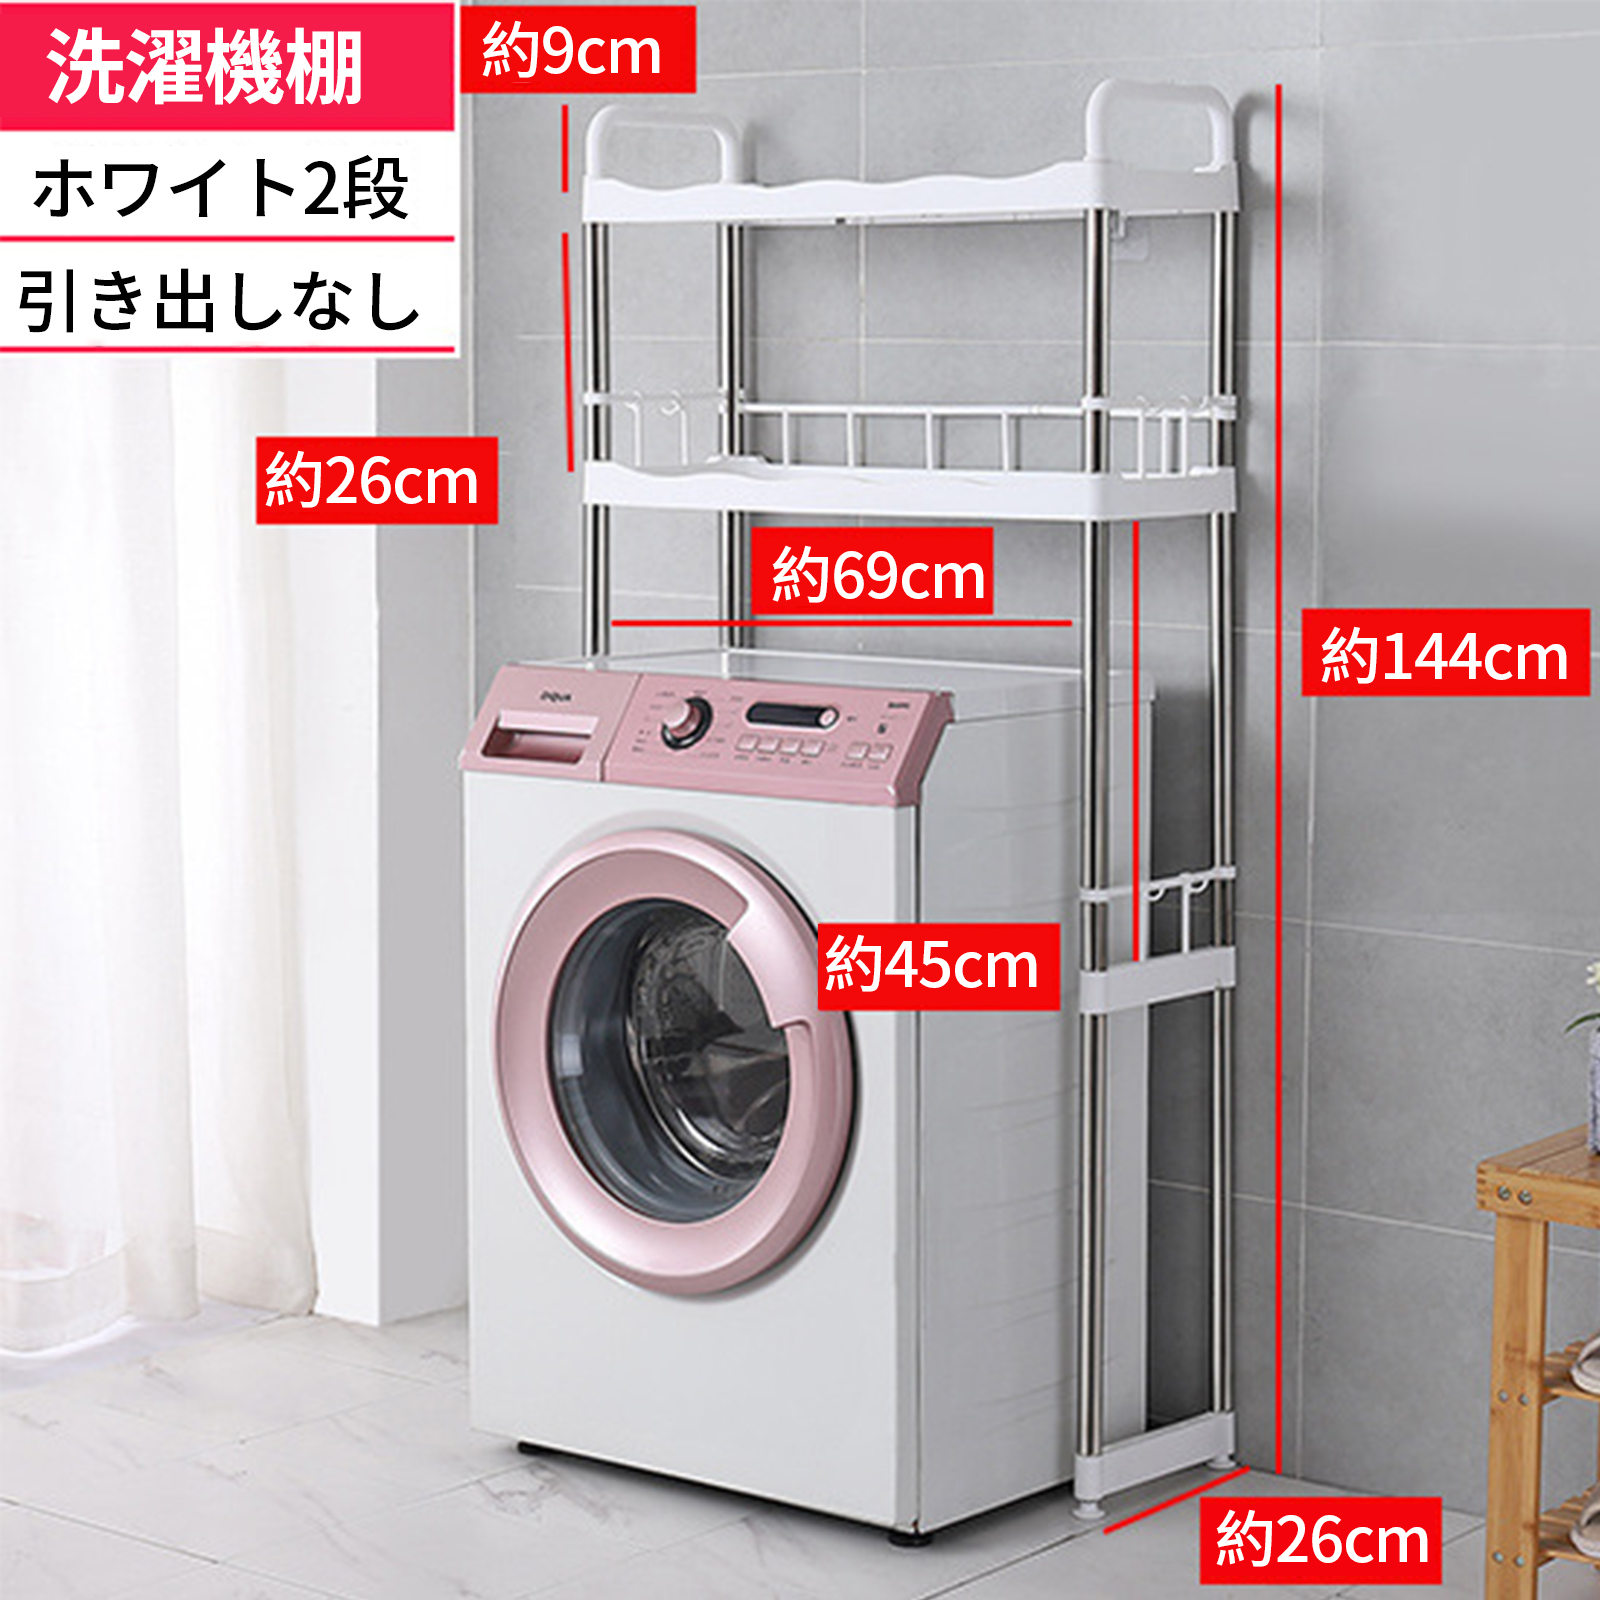 White washing machine rack [ without drawers ]